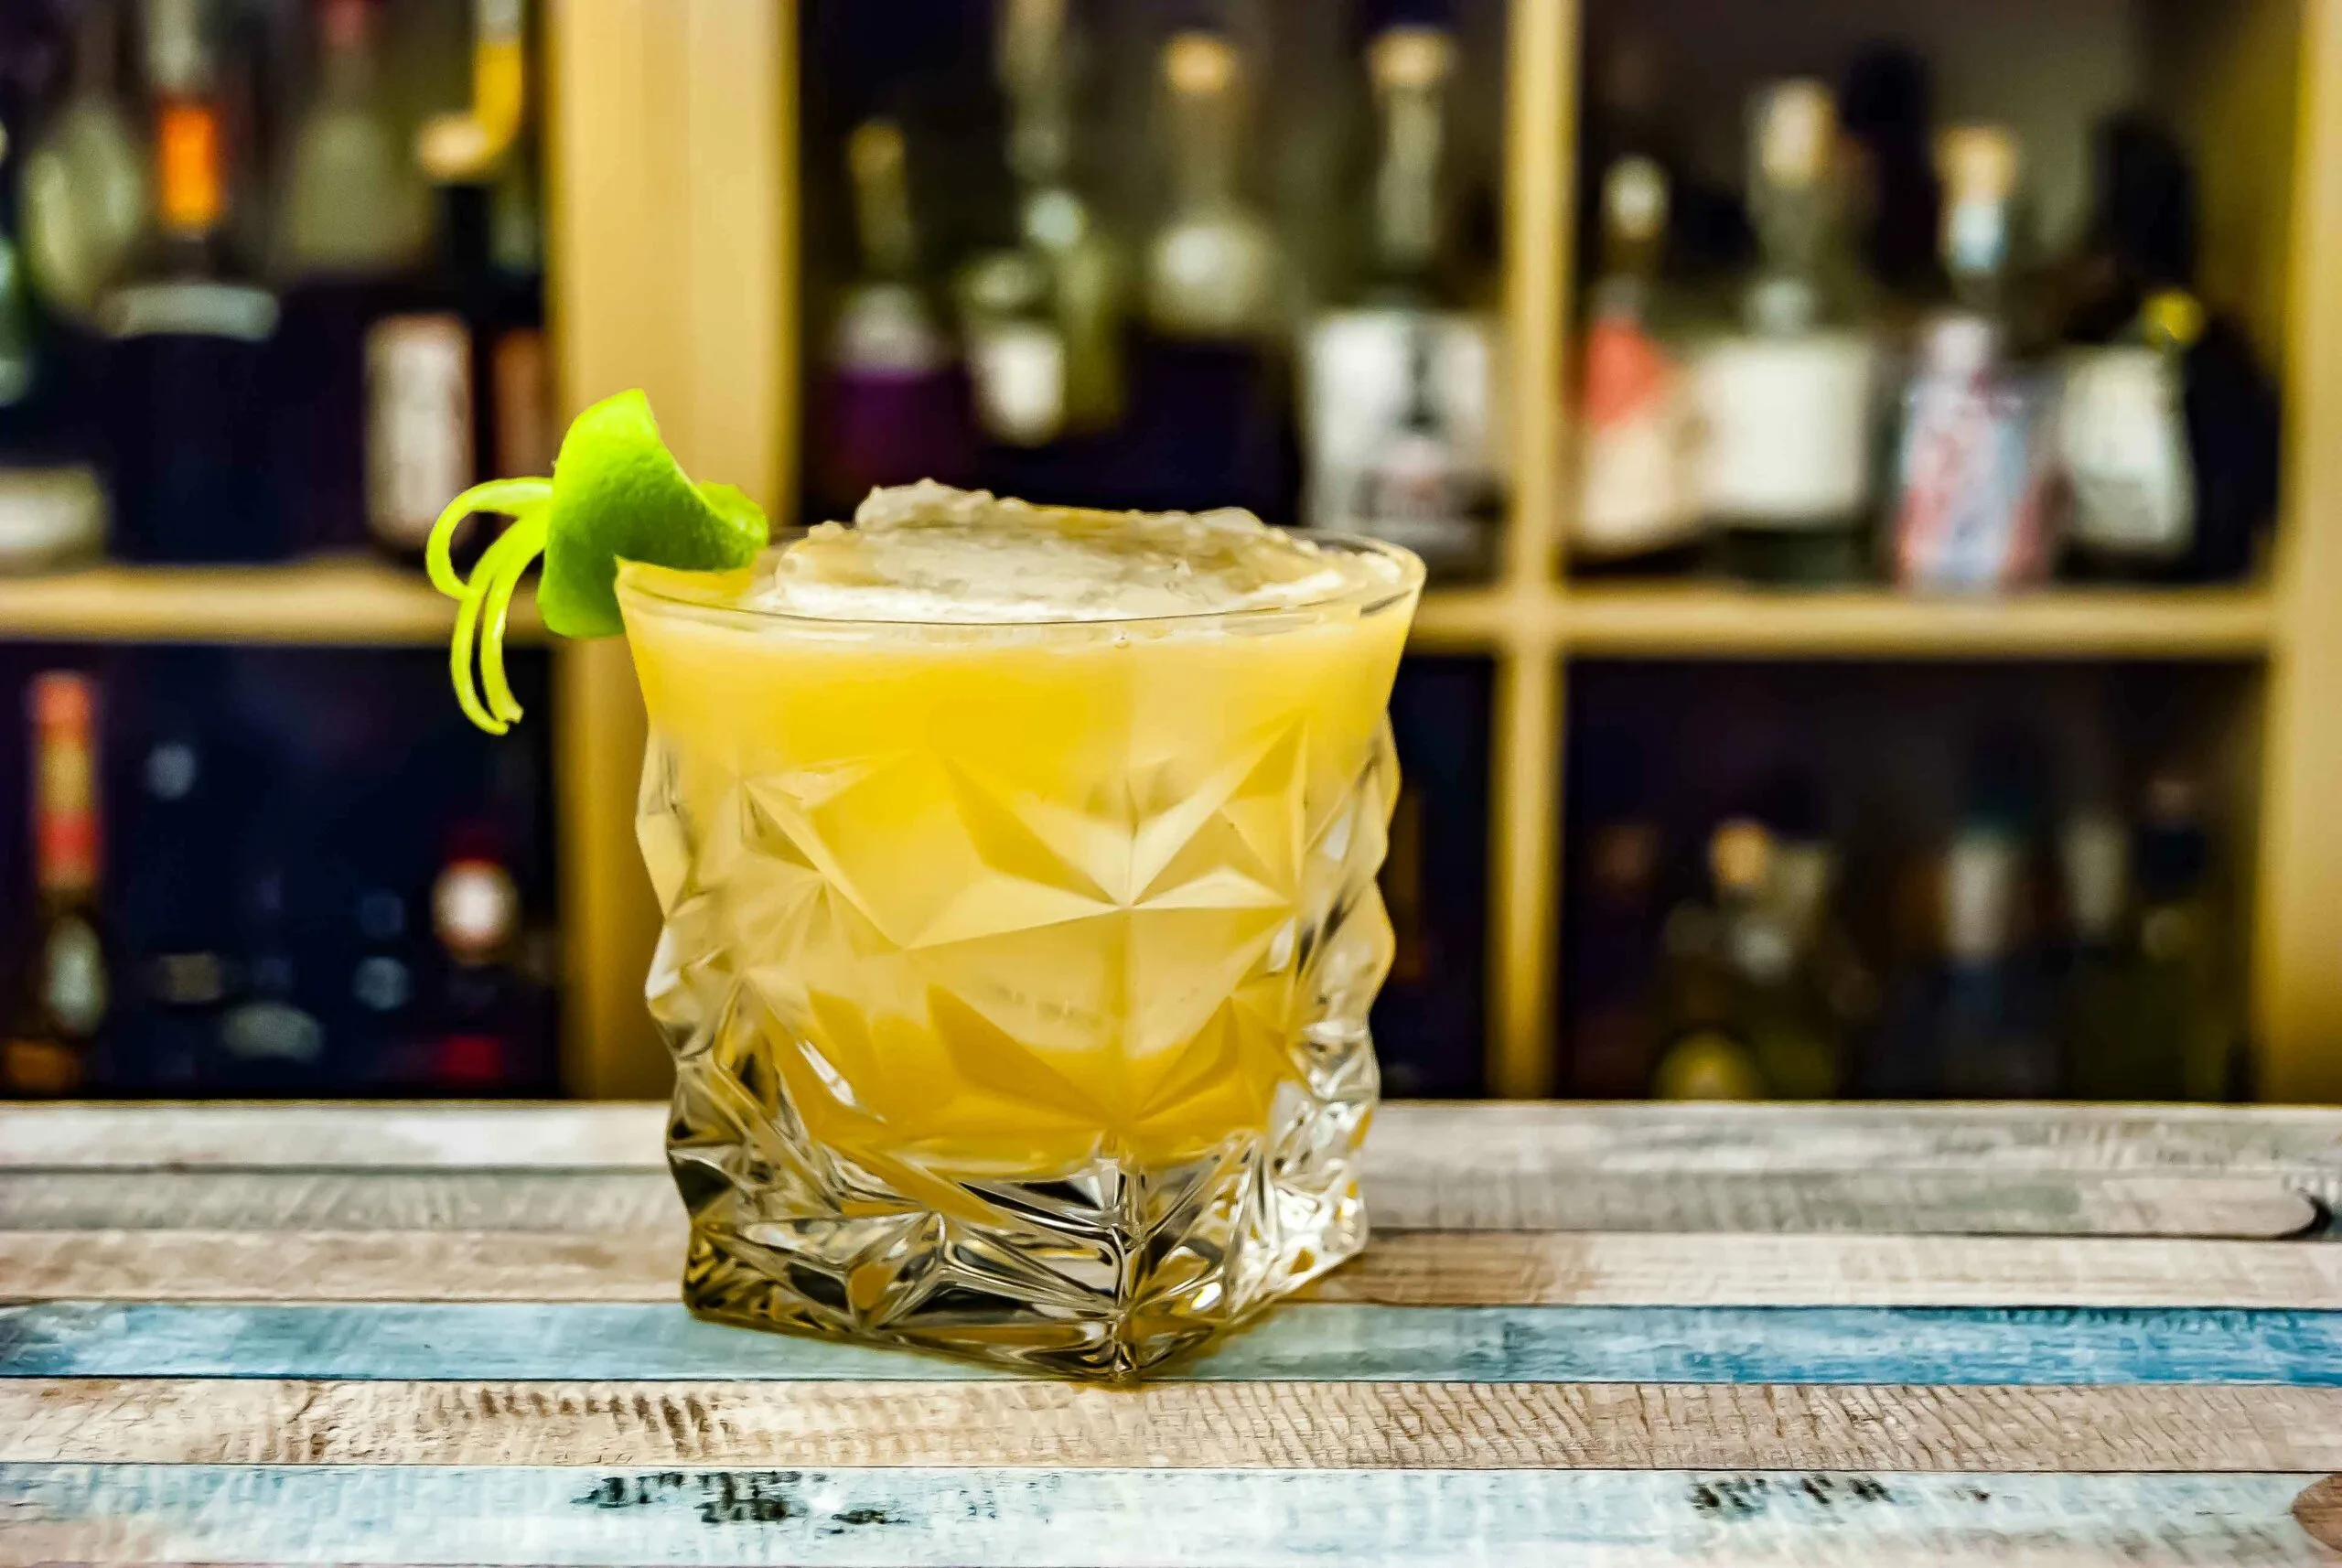 Pisco Sour: The Classic Peruvian Cocktail